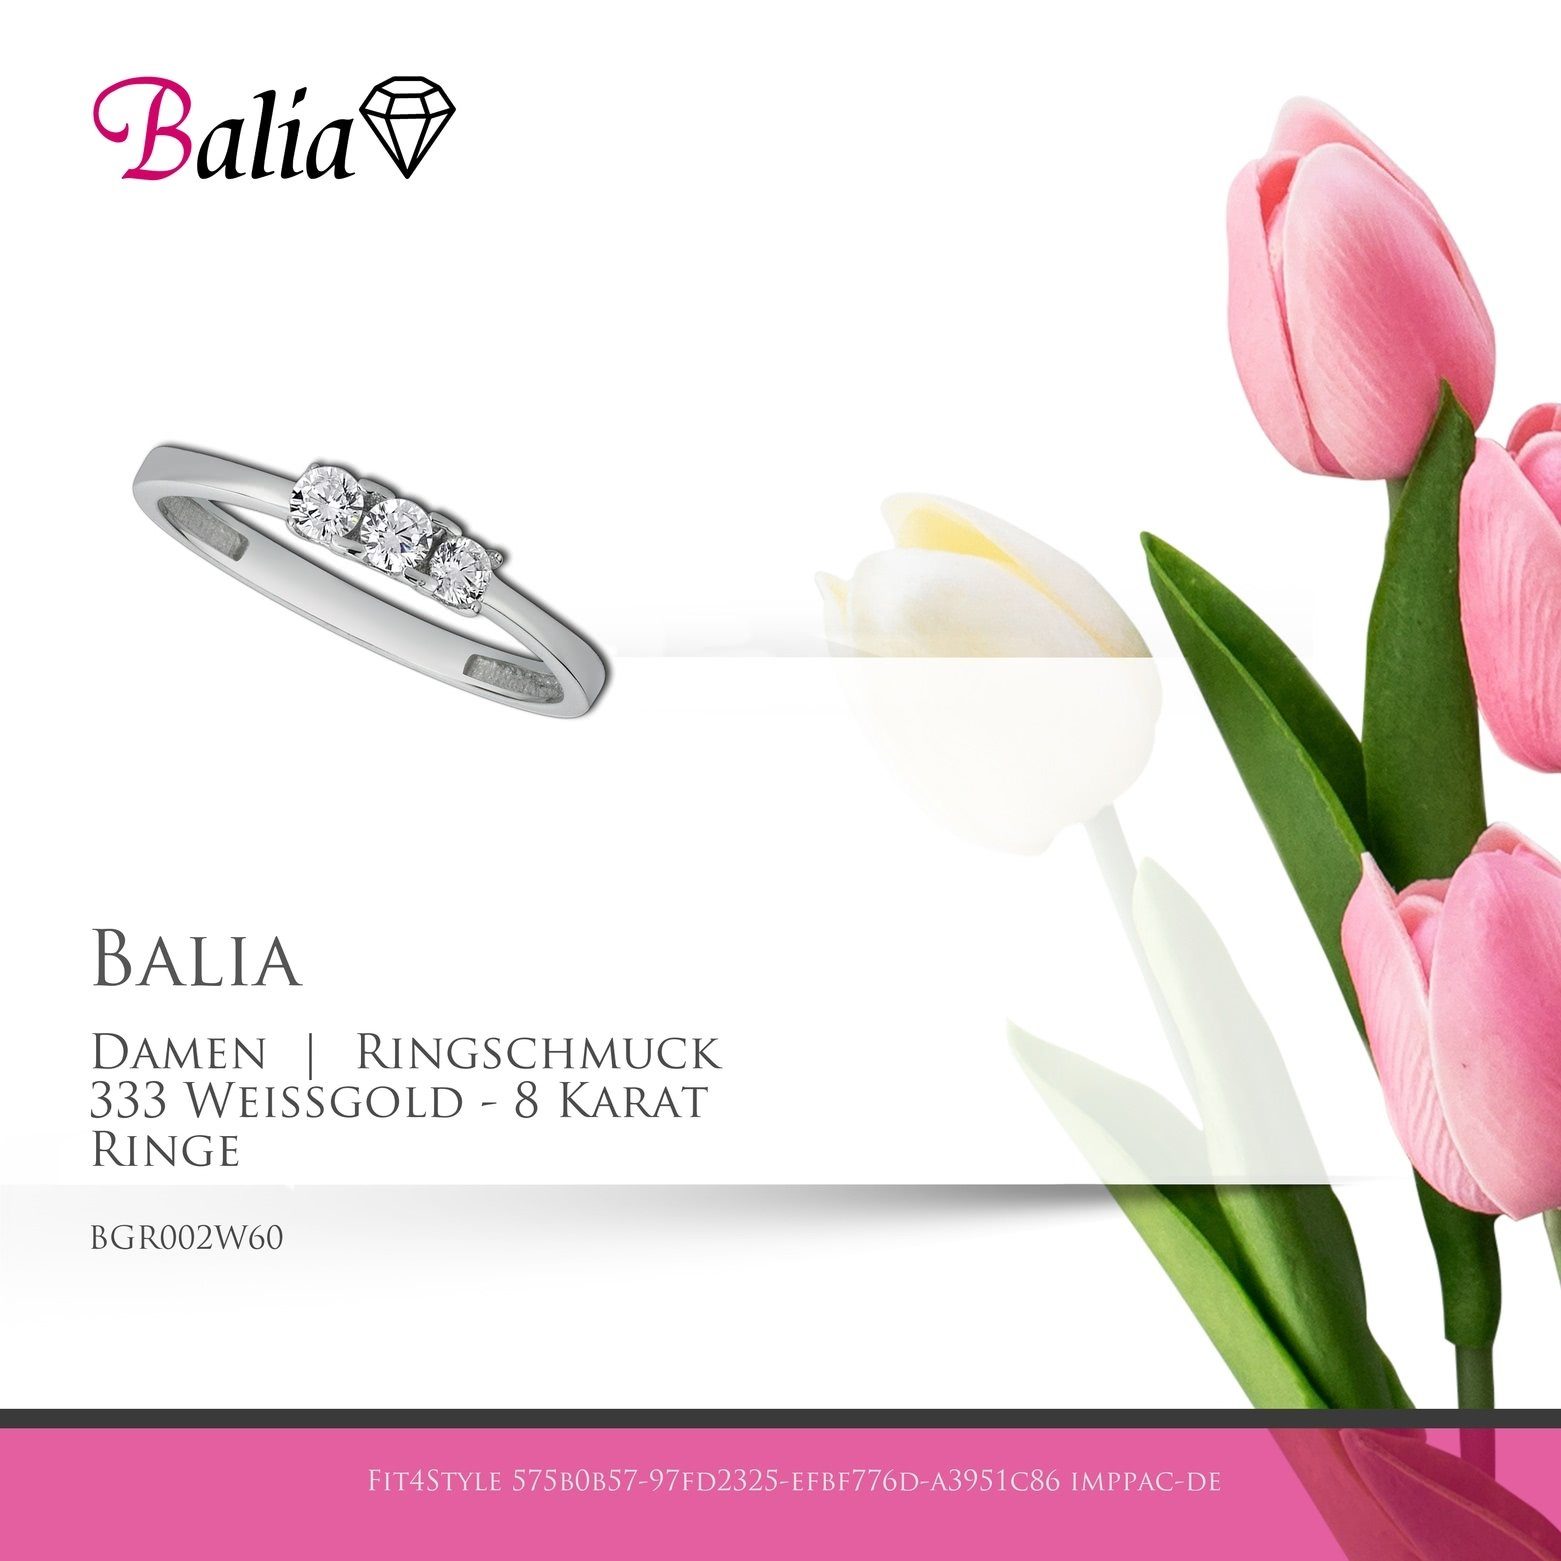 Balia Goldring Balia Damen Ring 3 Zirkonia Weißgold Farbe: 8Karat (Fingerring), Weißgold Ring - 333 Gr.60 silber aus Karat, 8 Damen